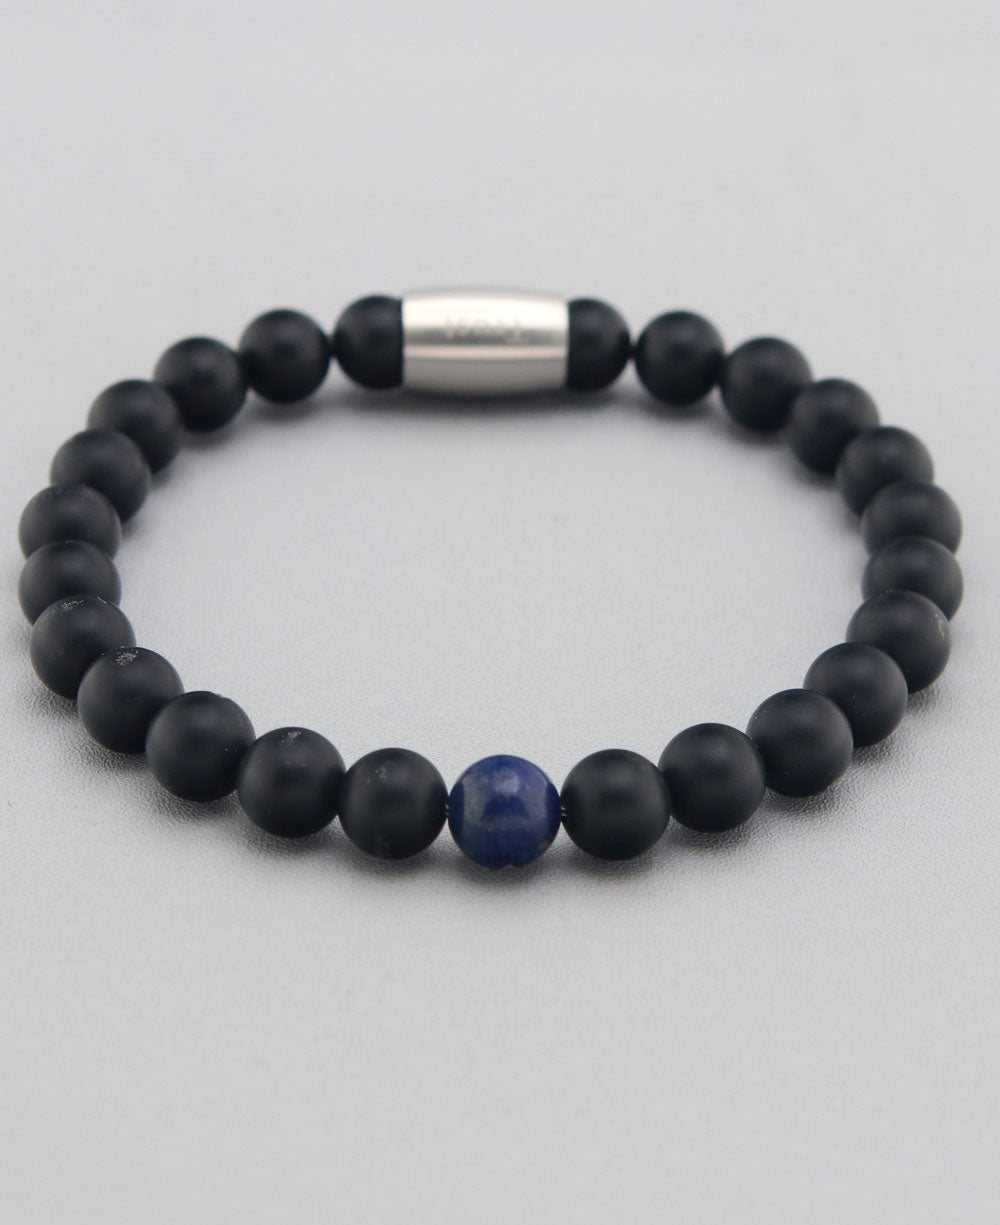 Black Onyx With Lapis Gemstone Trust Bracelet for Men and Women - Women's Size